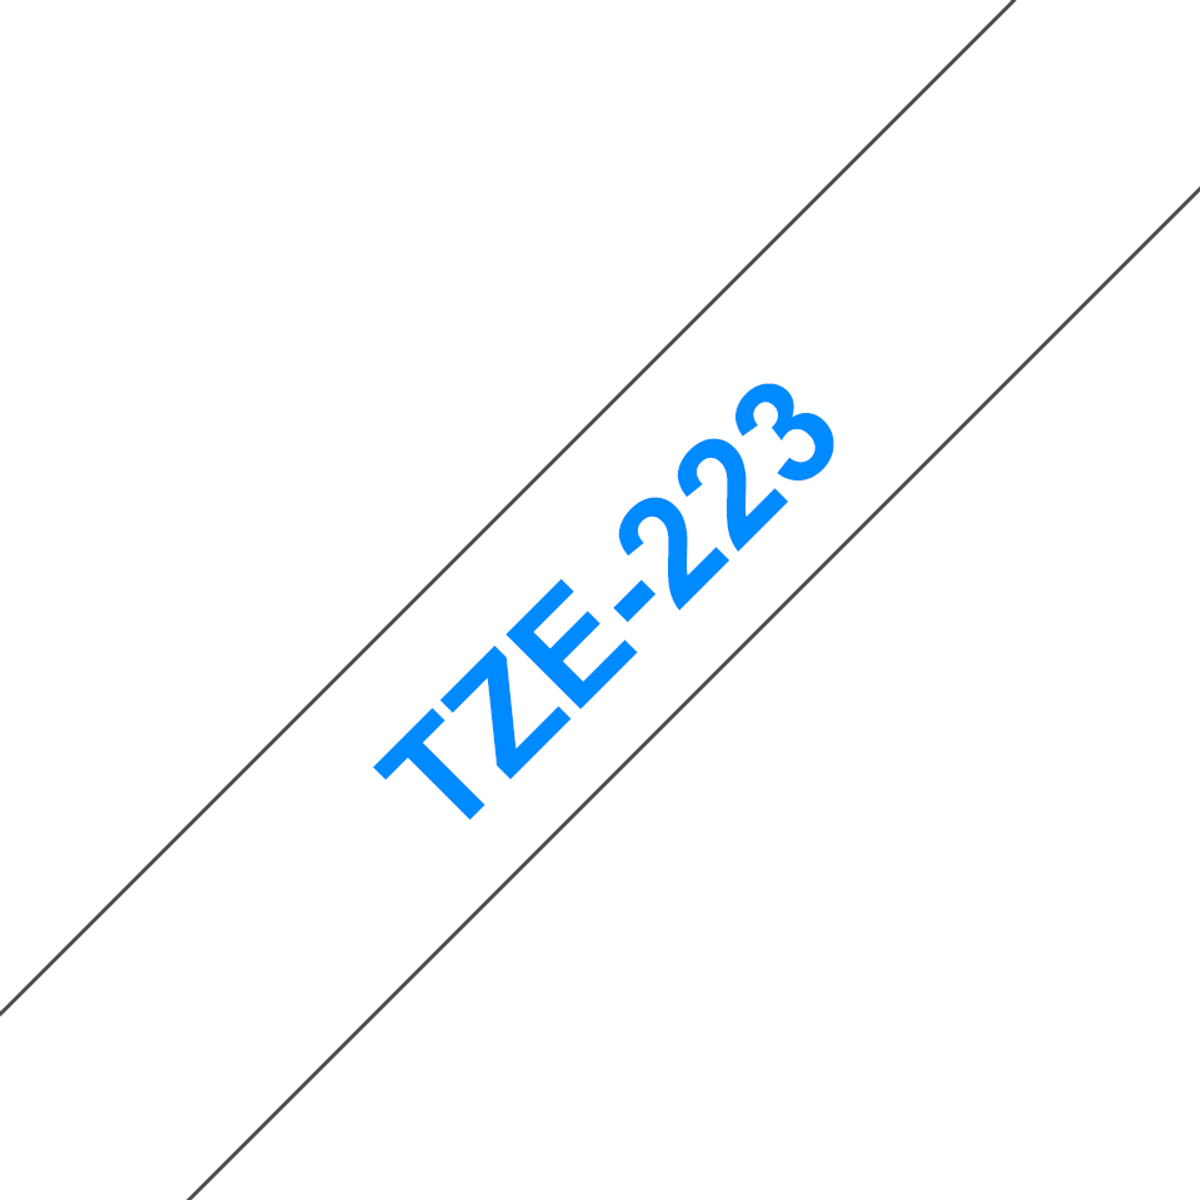 TZE223 9mm Blue On White Label Tape